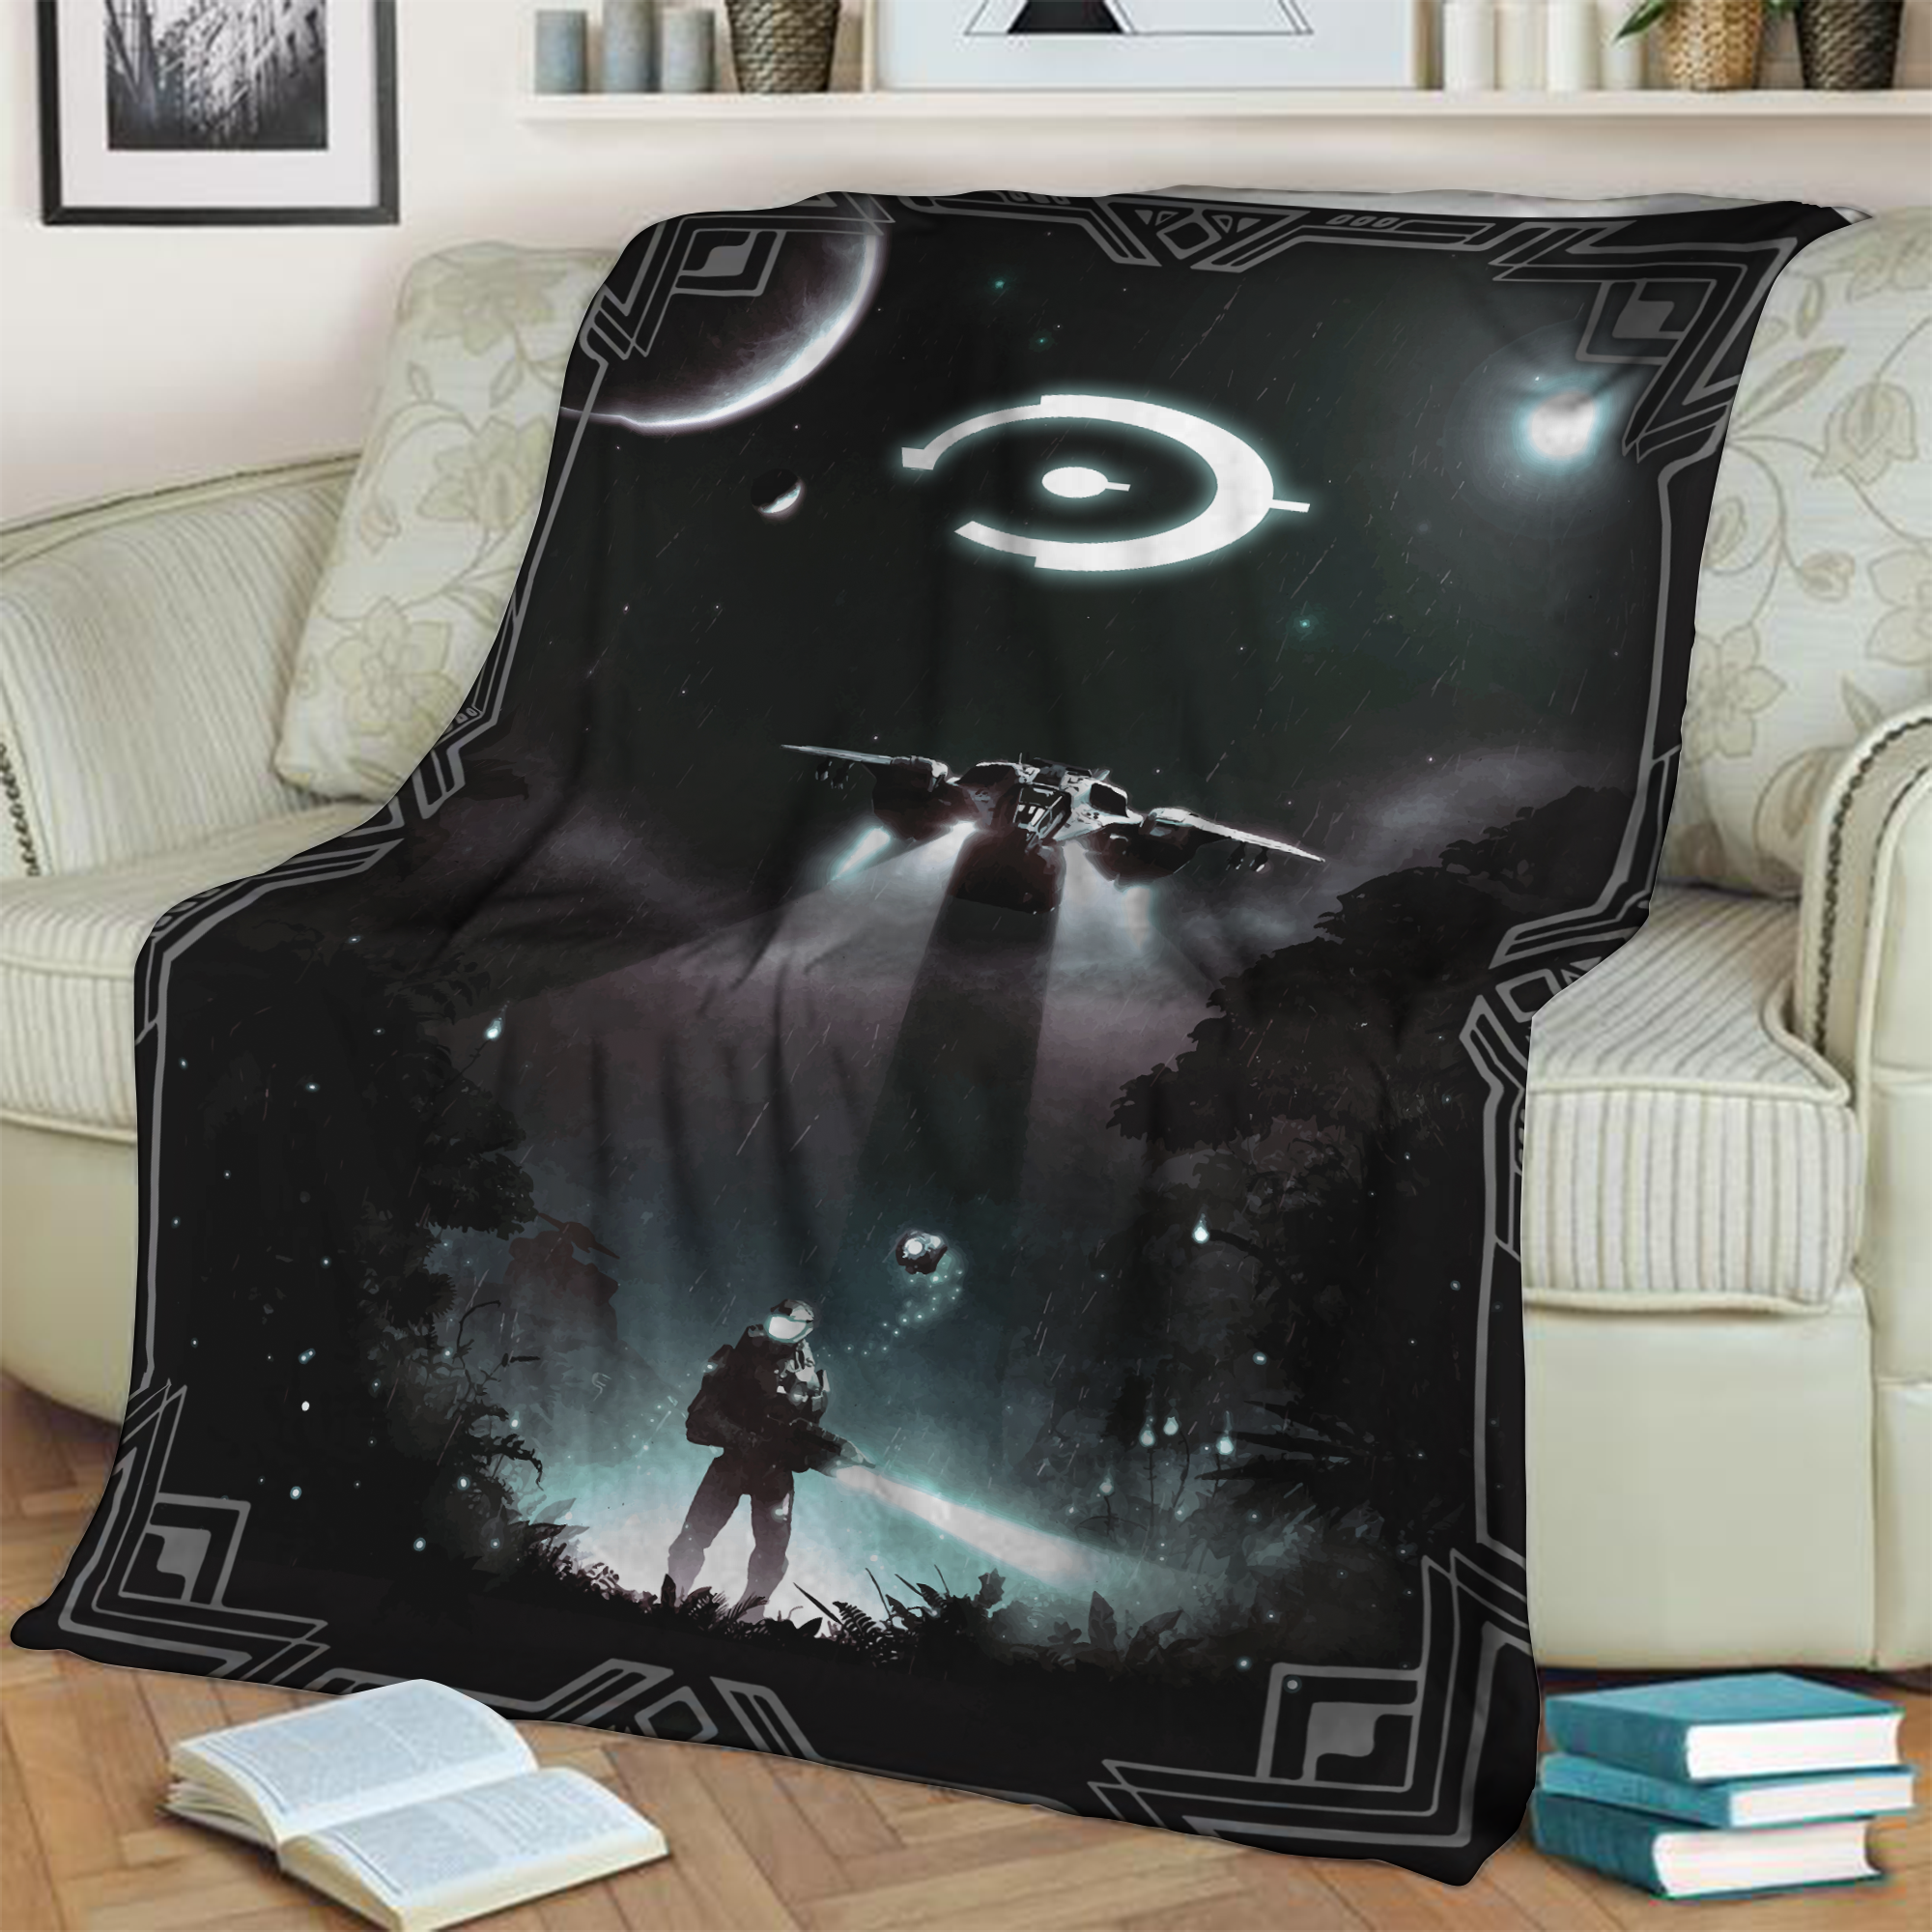 Halo 3D Throw Blanket 130cm x 150cm  